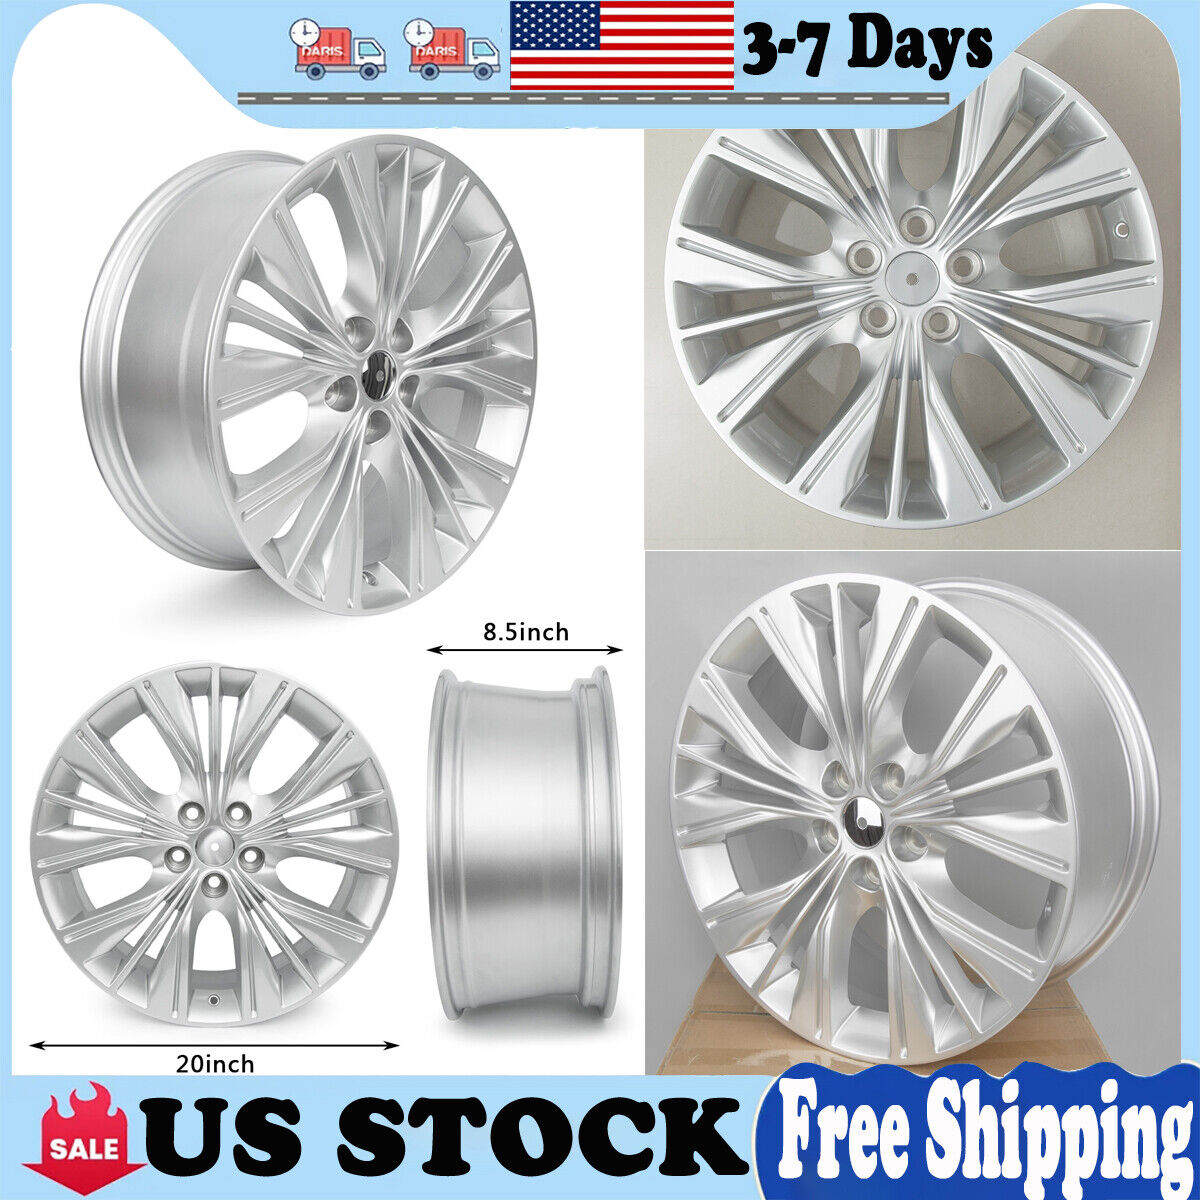 20 x 8.5 inch Replacement Rim Wheel Silver Rim for Chevrolet Impala 2014-2020 US